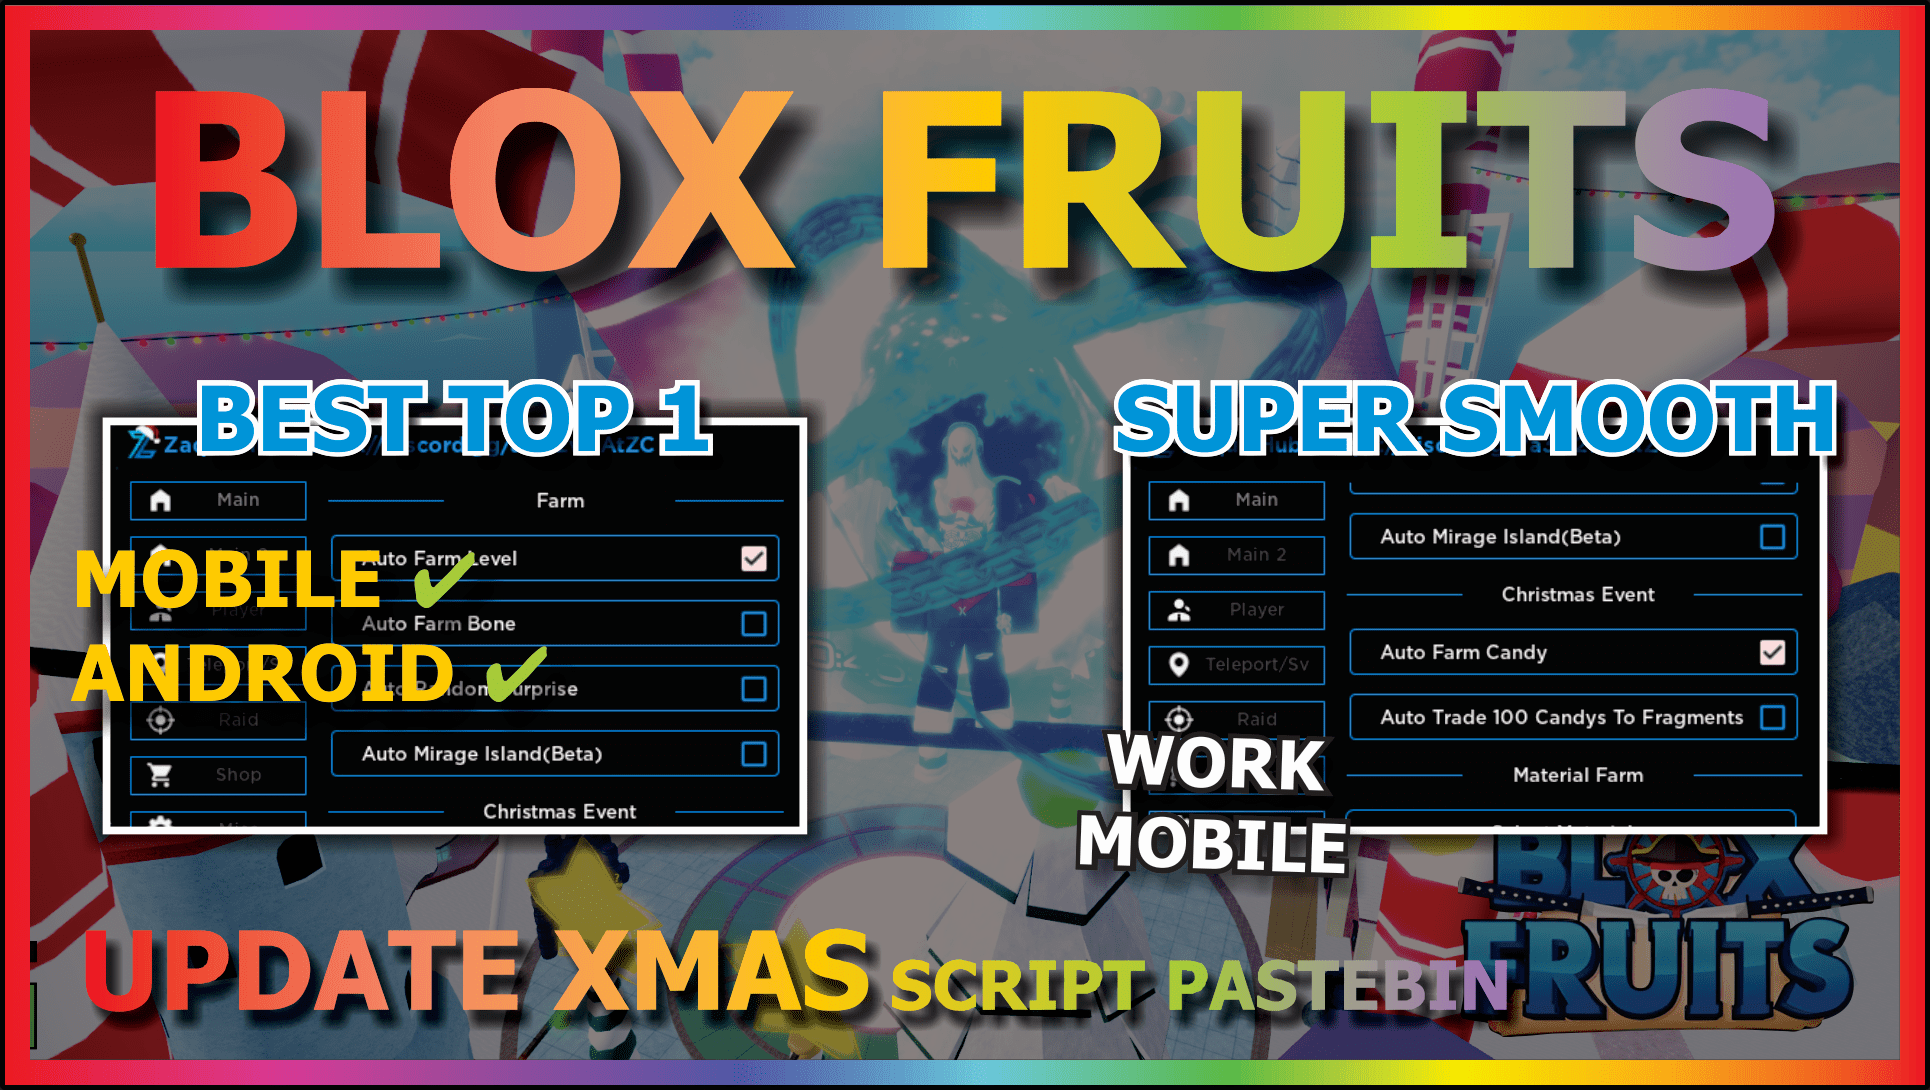 script for blox fruits fluxus